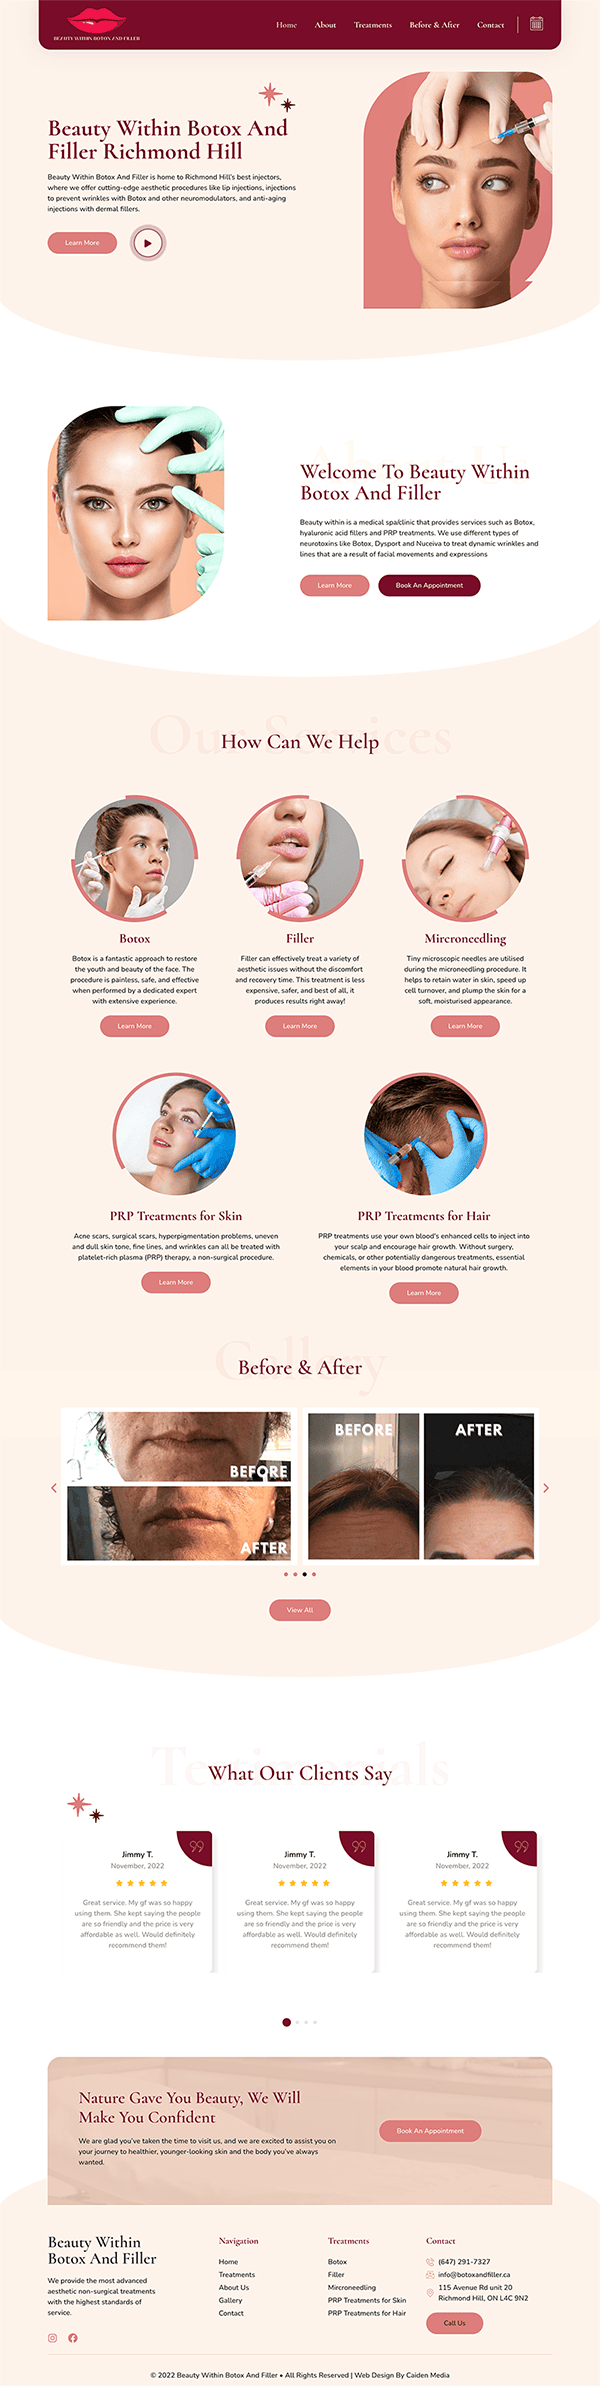 Botox And Filler Website